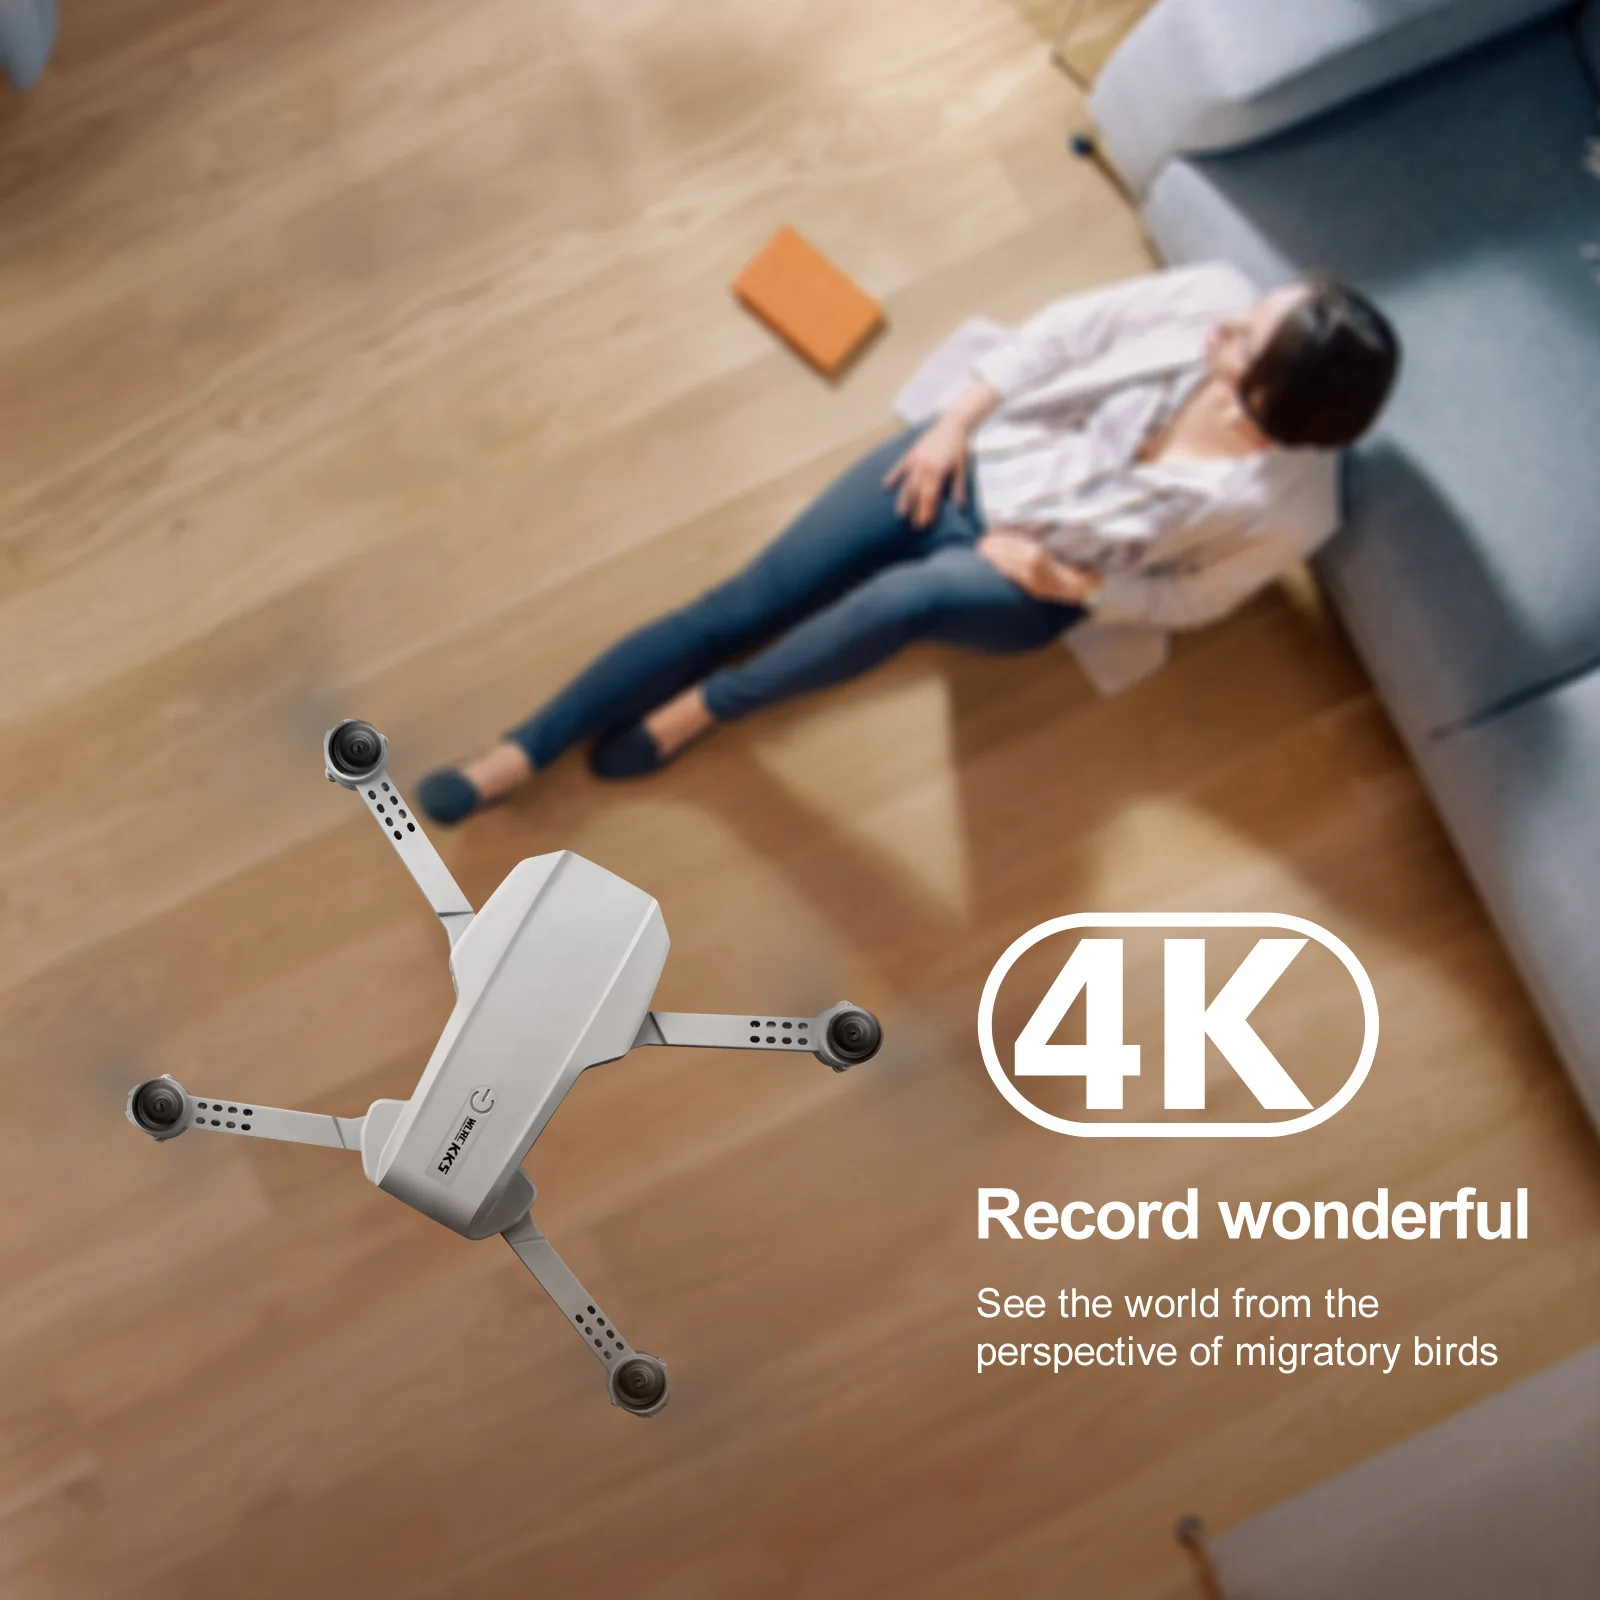 KK5 Drone 4k HD Wide Angle Camera WiFi Foldable Quadcopter